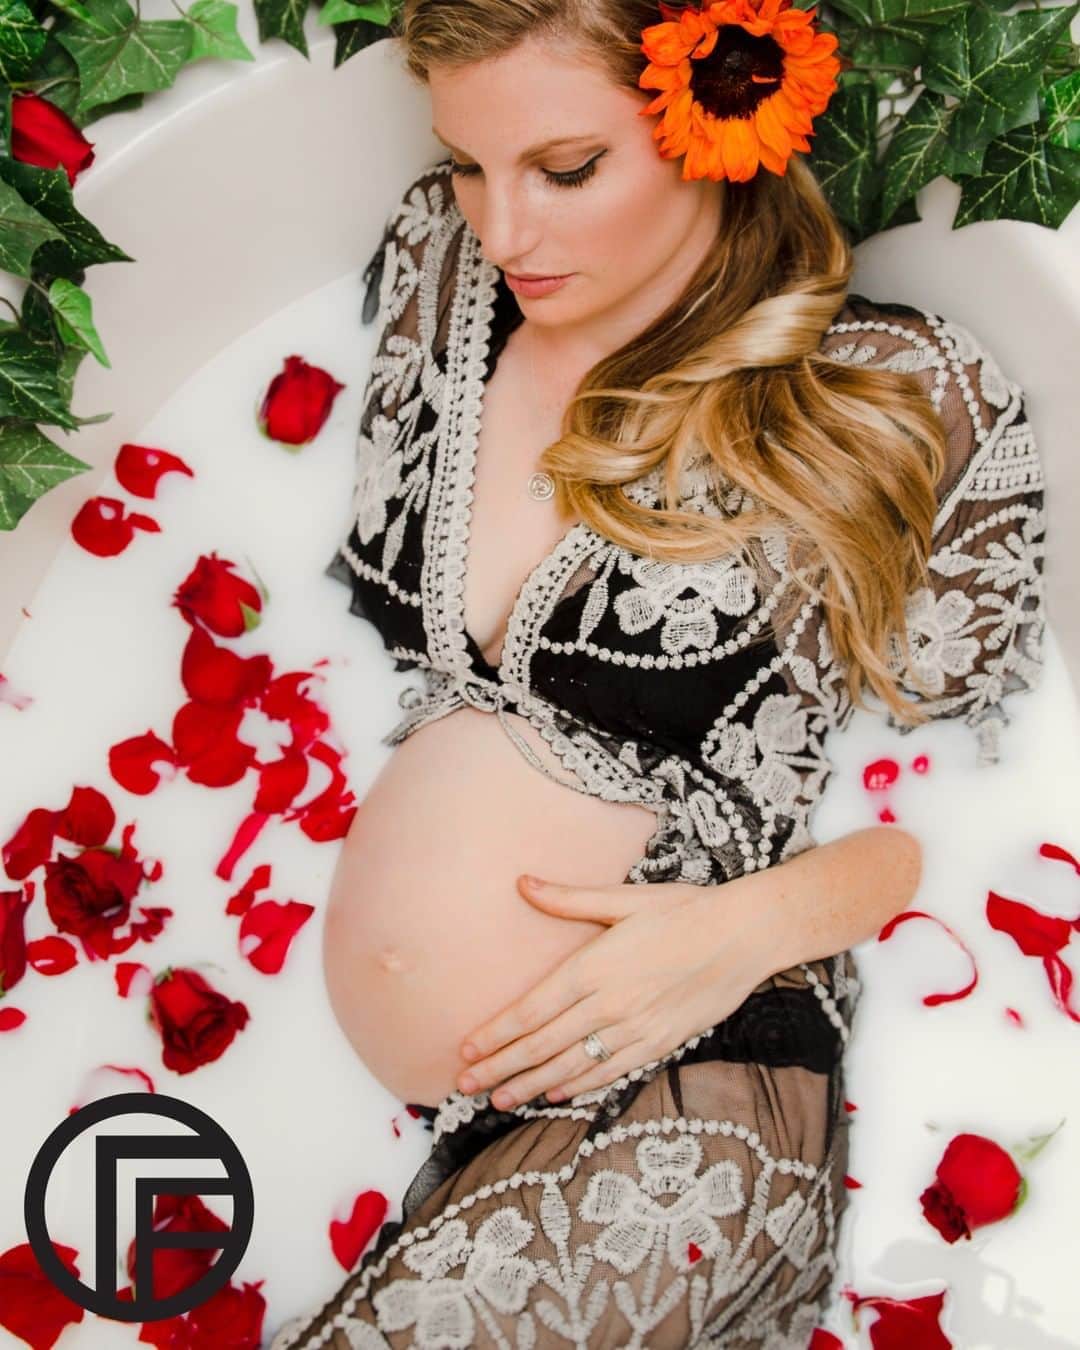 Timo the Fotographerのインスタグラム：「Model: @monicajernigan8⠀⠀⠀⠀⠀⠀⠀⠀⠀ Fotographer @fantim⠀⠀⠀⠀⠀⠀⠀⠀⠀ _________________________ ⠀⠀⠀⠀⠀⠀⠀⠀⠀ #fantim #frazierfotography #写真 #モデル #0711 #nashvillePhotographer #beauty #photography #inspiration #pregnancy #designer #momblogger #nashville #fashion #style #milkbath #pregnant #photoshoot #art #model #fashionweek #lingerie #blueeyes #fotography #blog #personalbrand #taylorswift #influencer」